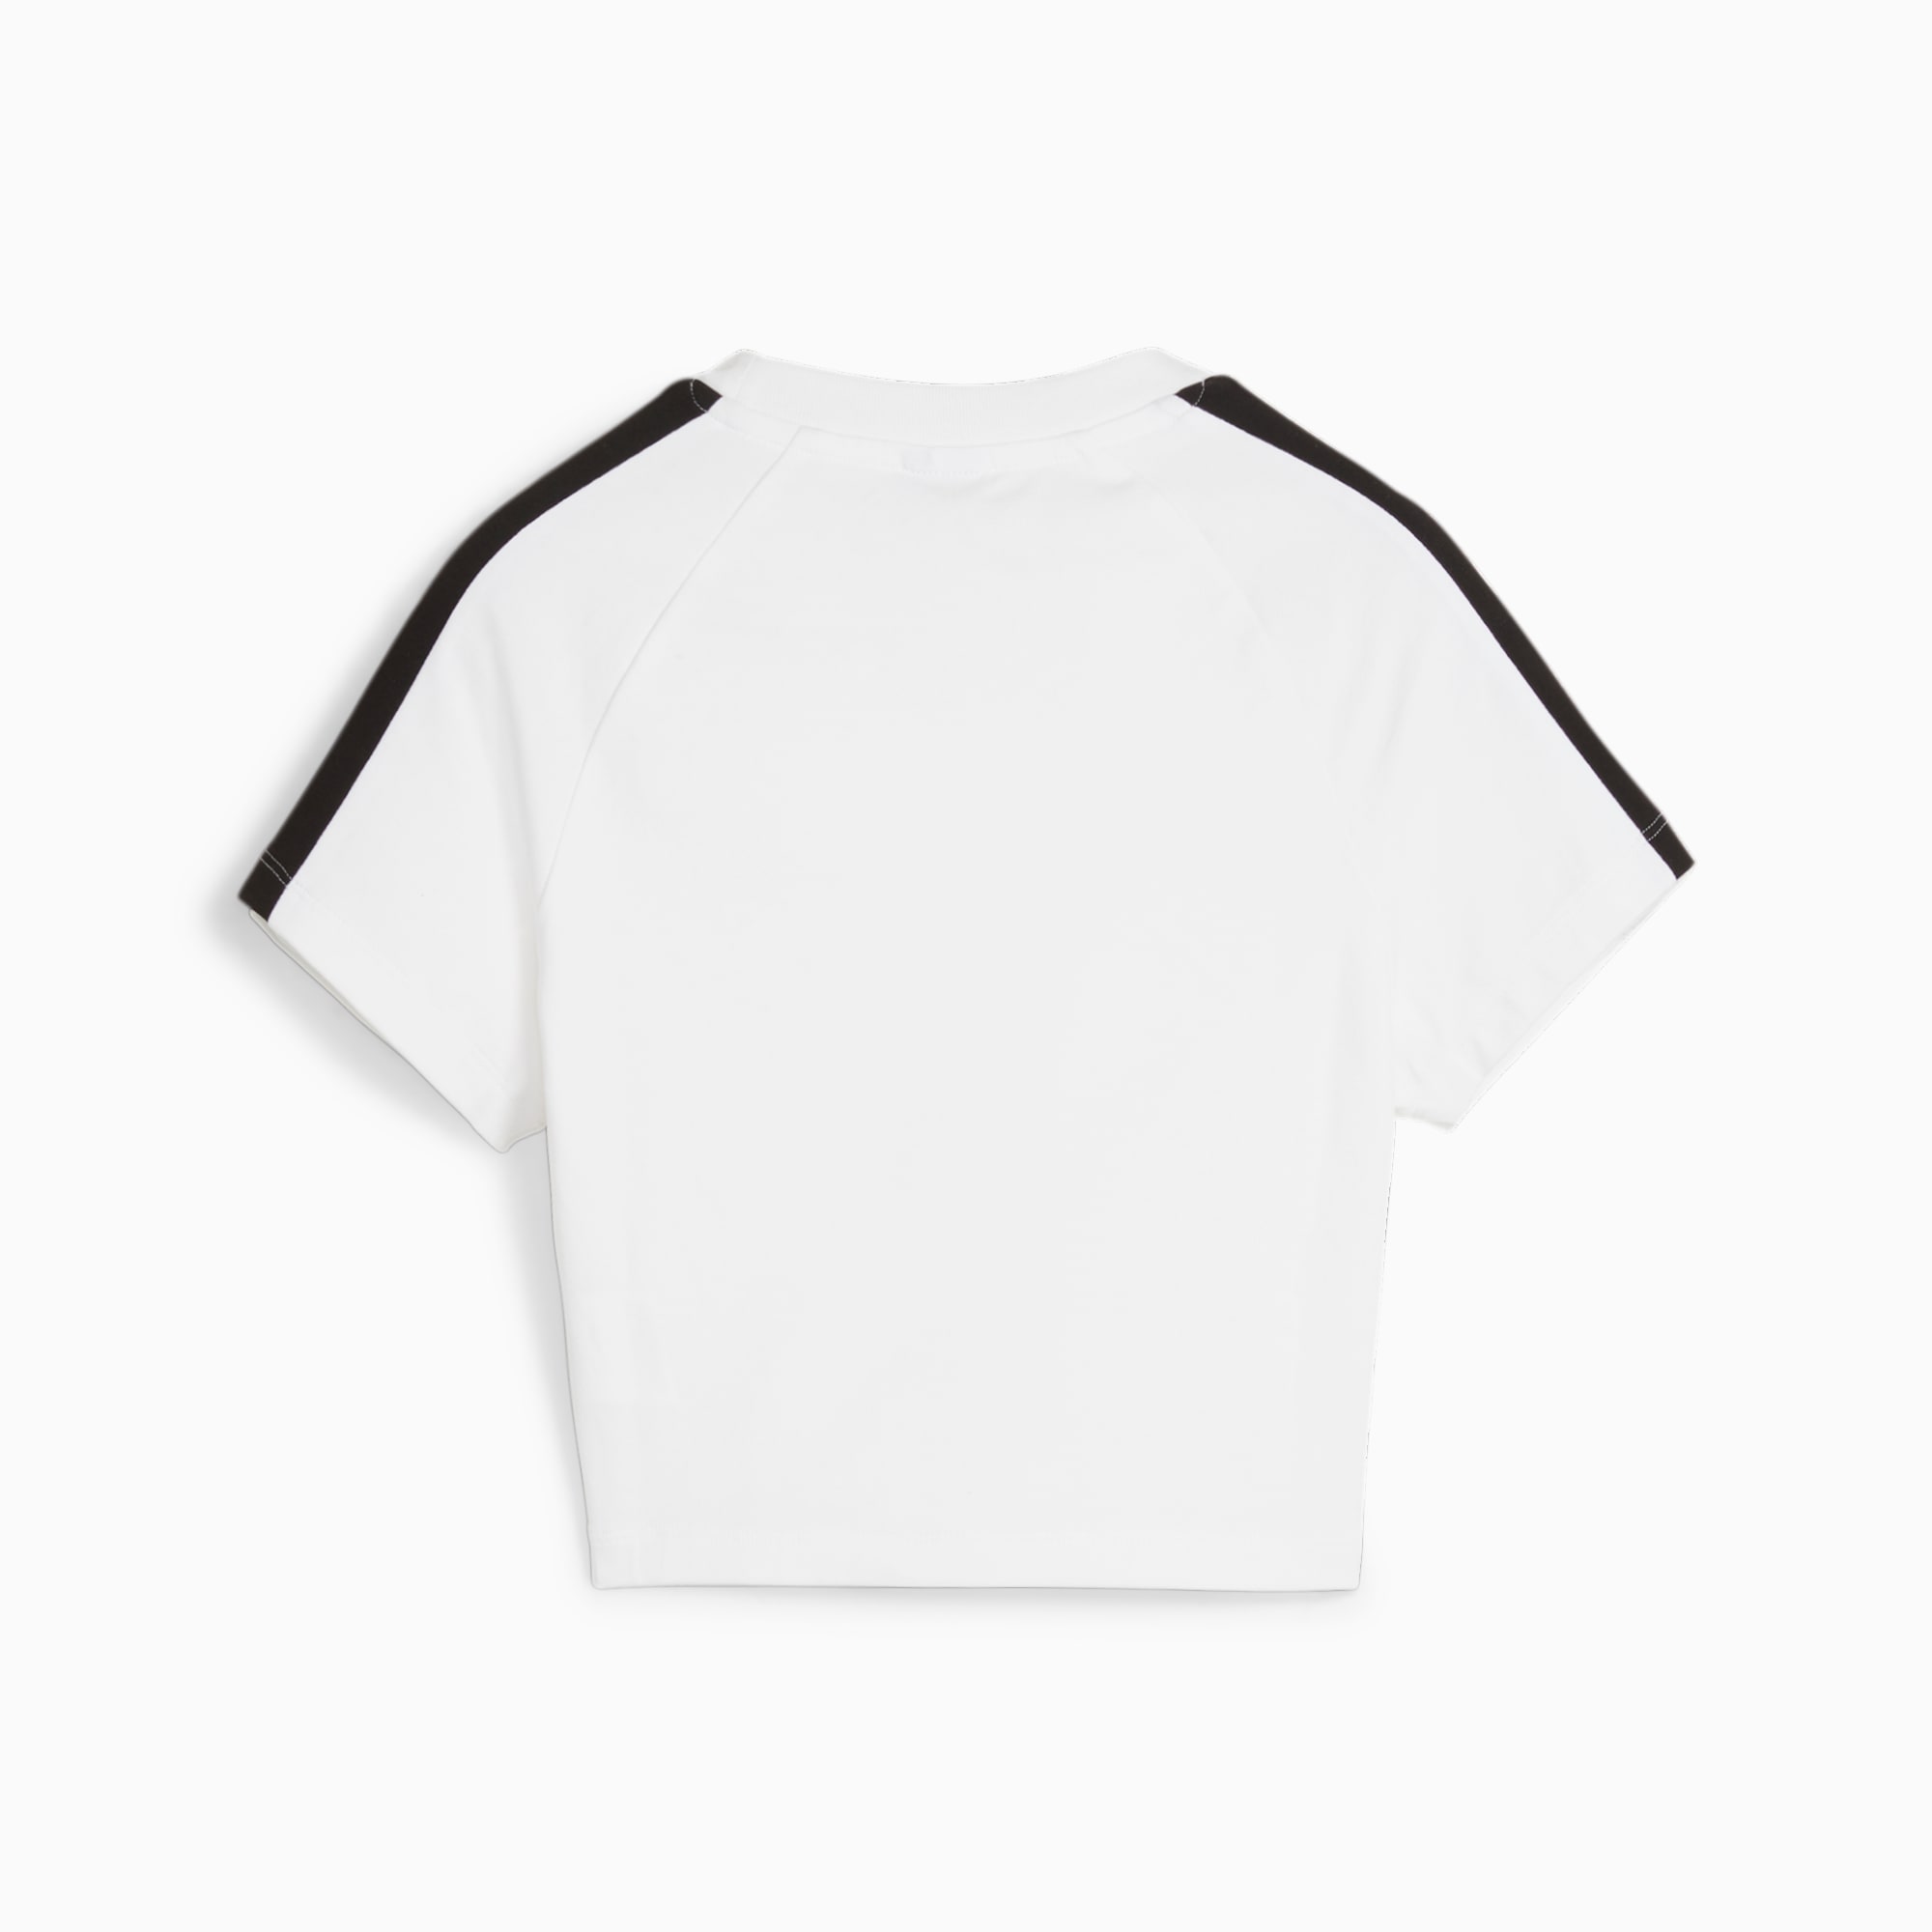 PUMA Iconic T7 Women's Baby T-Shirt, White, Size L, Clothing